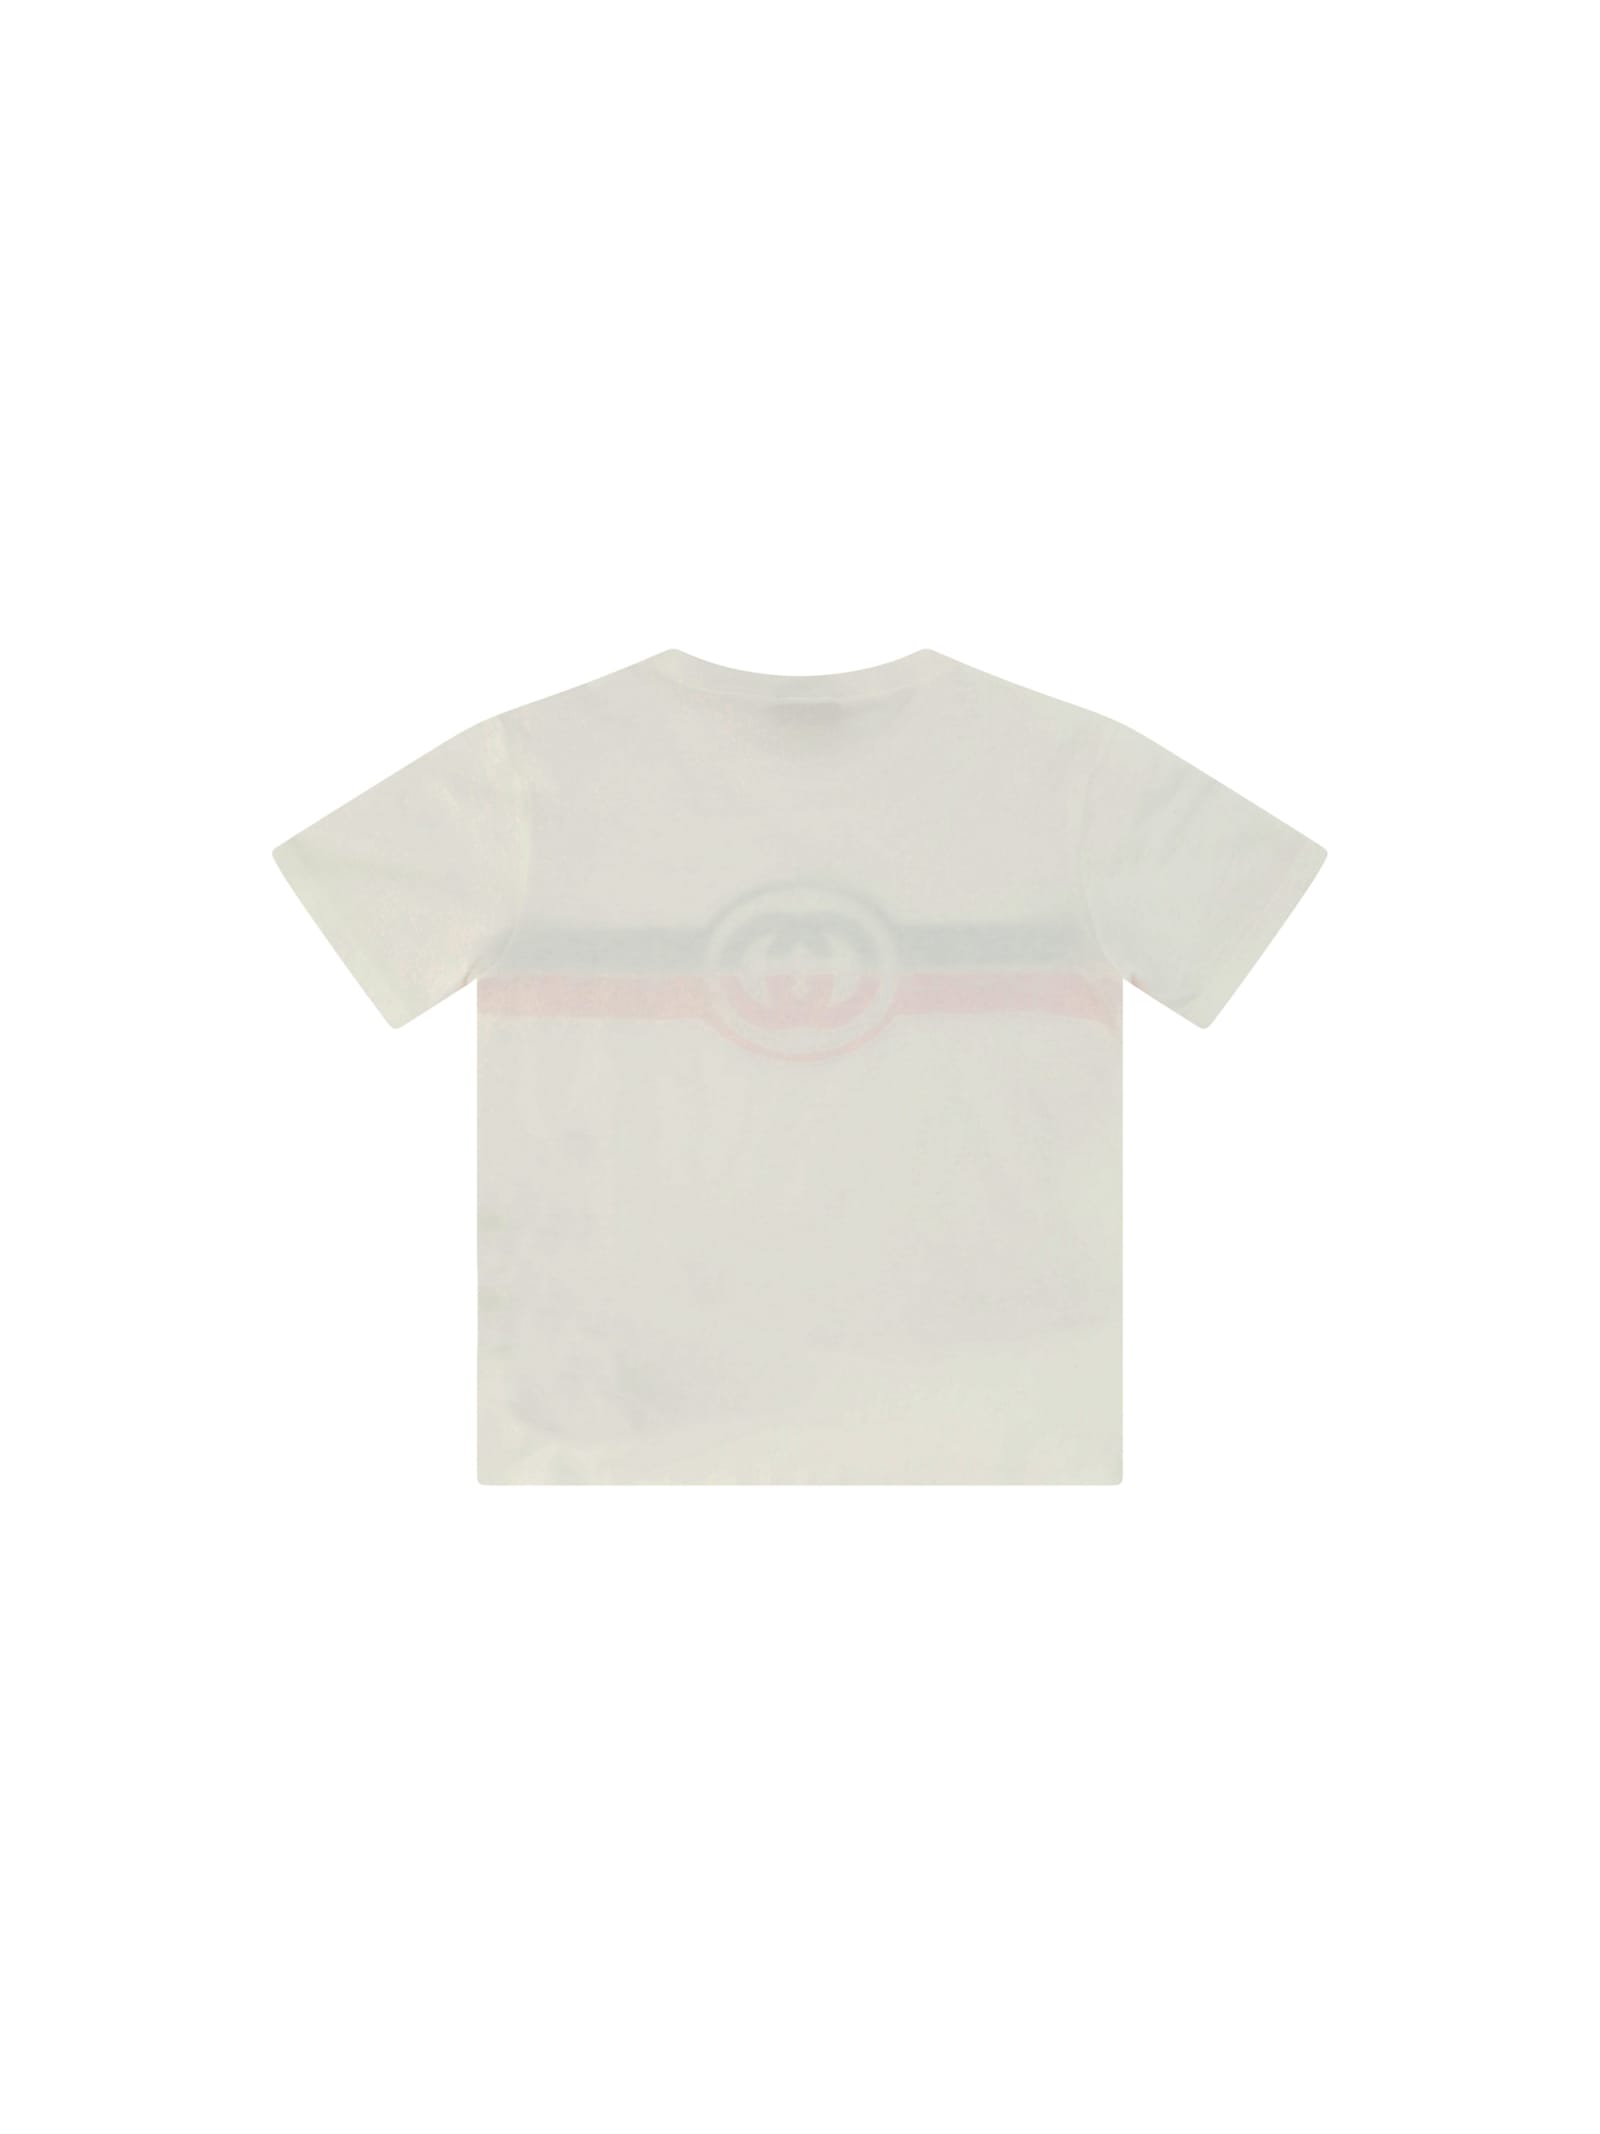 Shop Gucci T-shirt For Boy